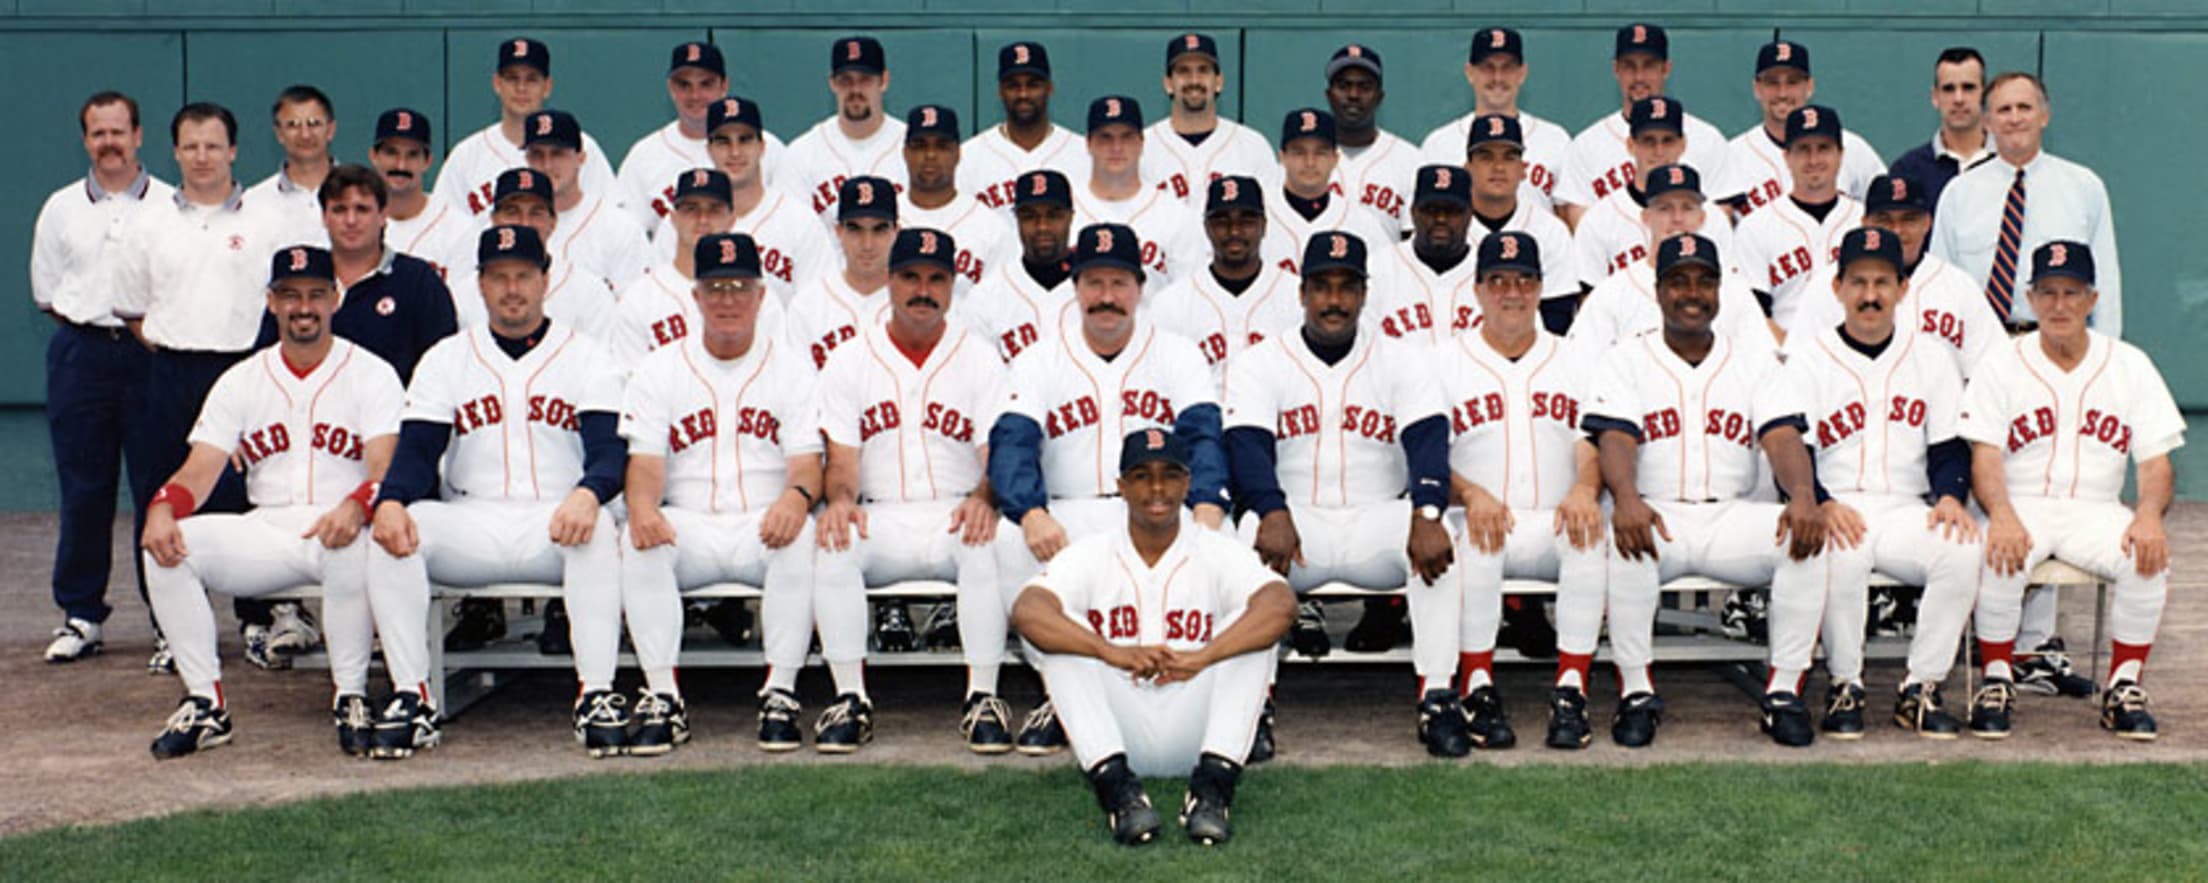 BOSTON RED SOX VINTAGE 1990'S FENWAY PARK T-SHIRT YOUTH LARGE - Bucks  County Baseball Co.